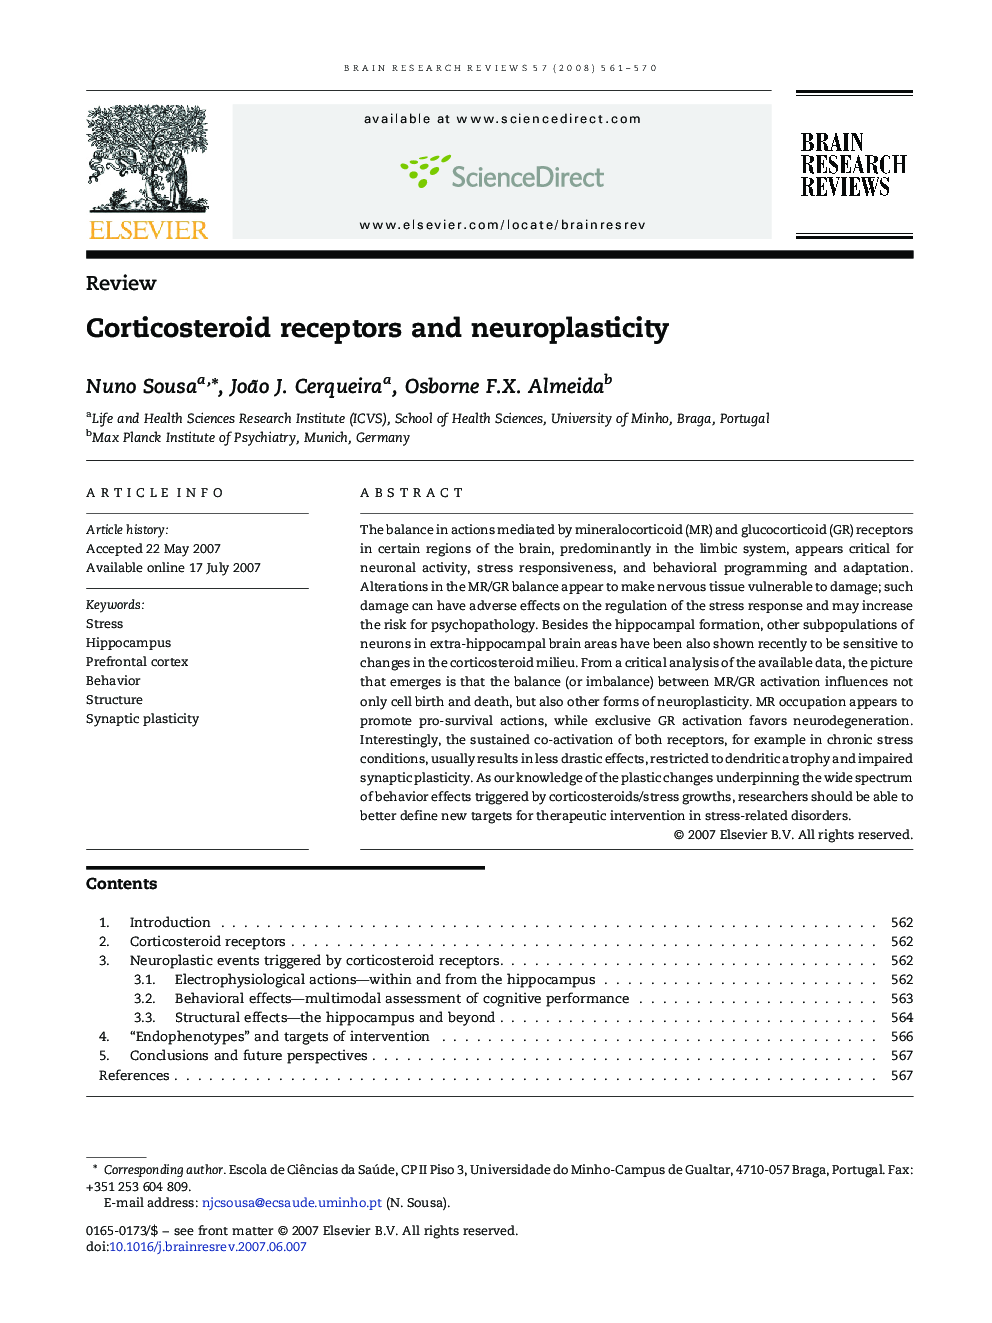 Corticosteroid receptors and neuroplasticity